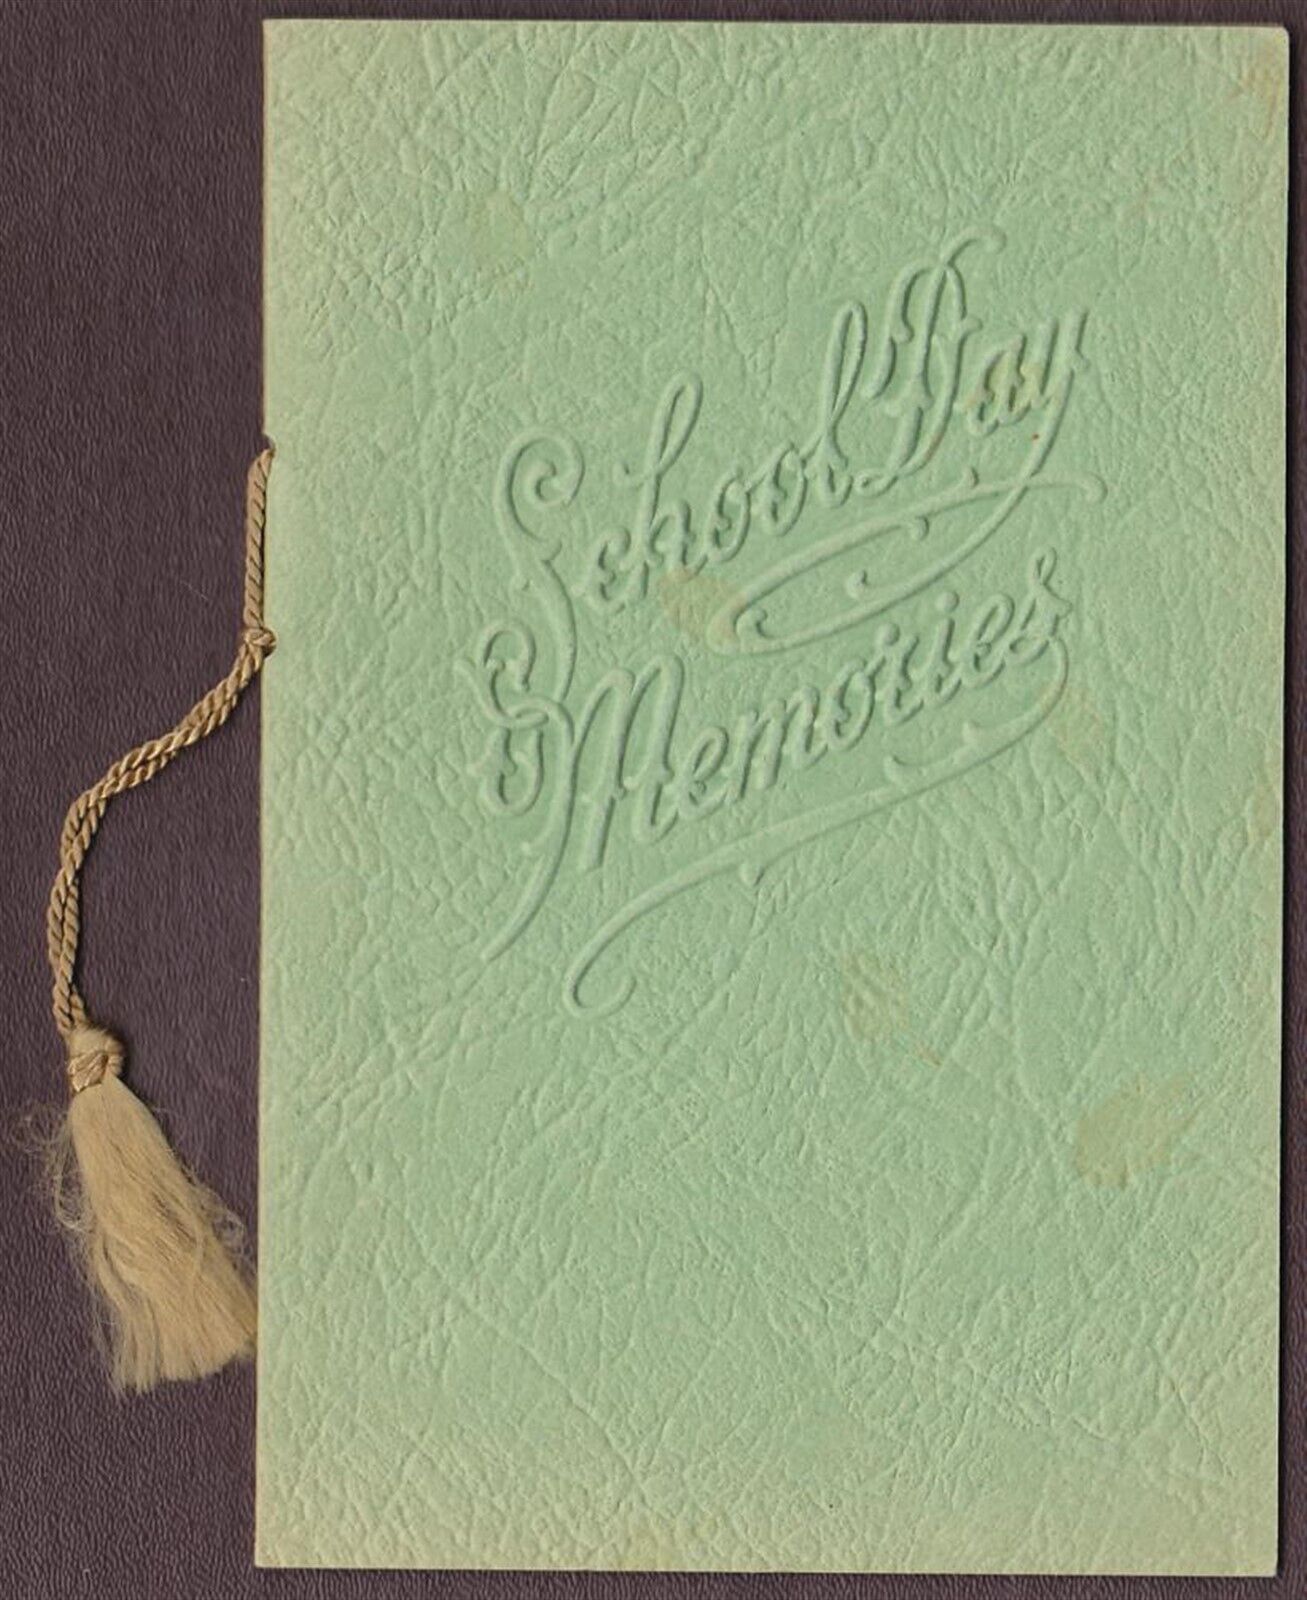 School Day Memories, ca. 1920s - Generic, Blank & Unused Senior Class Book